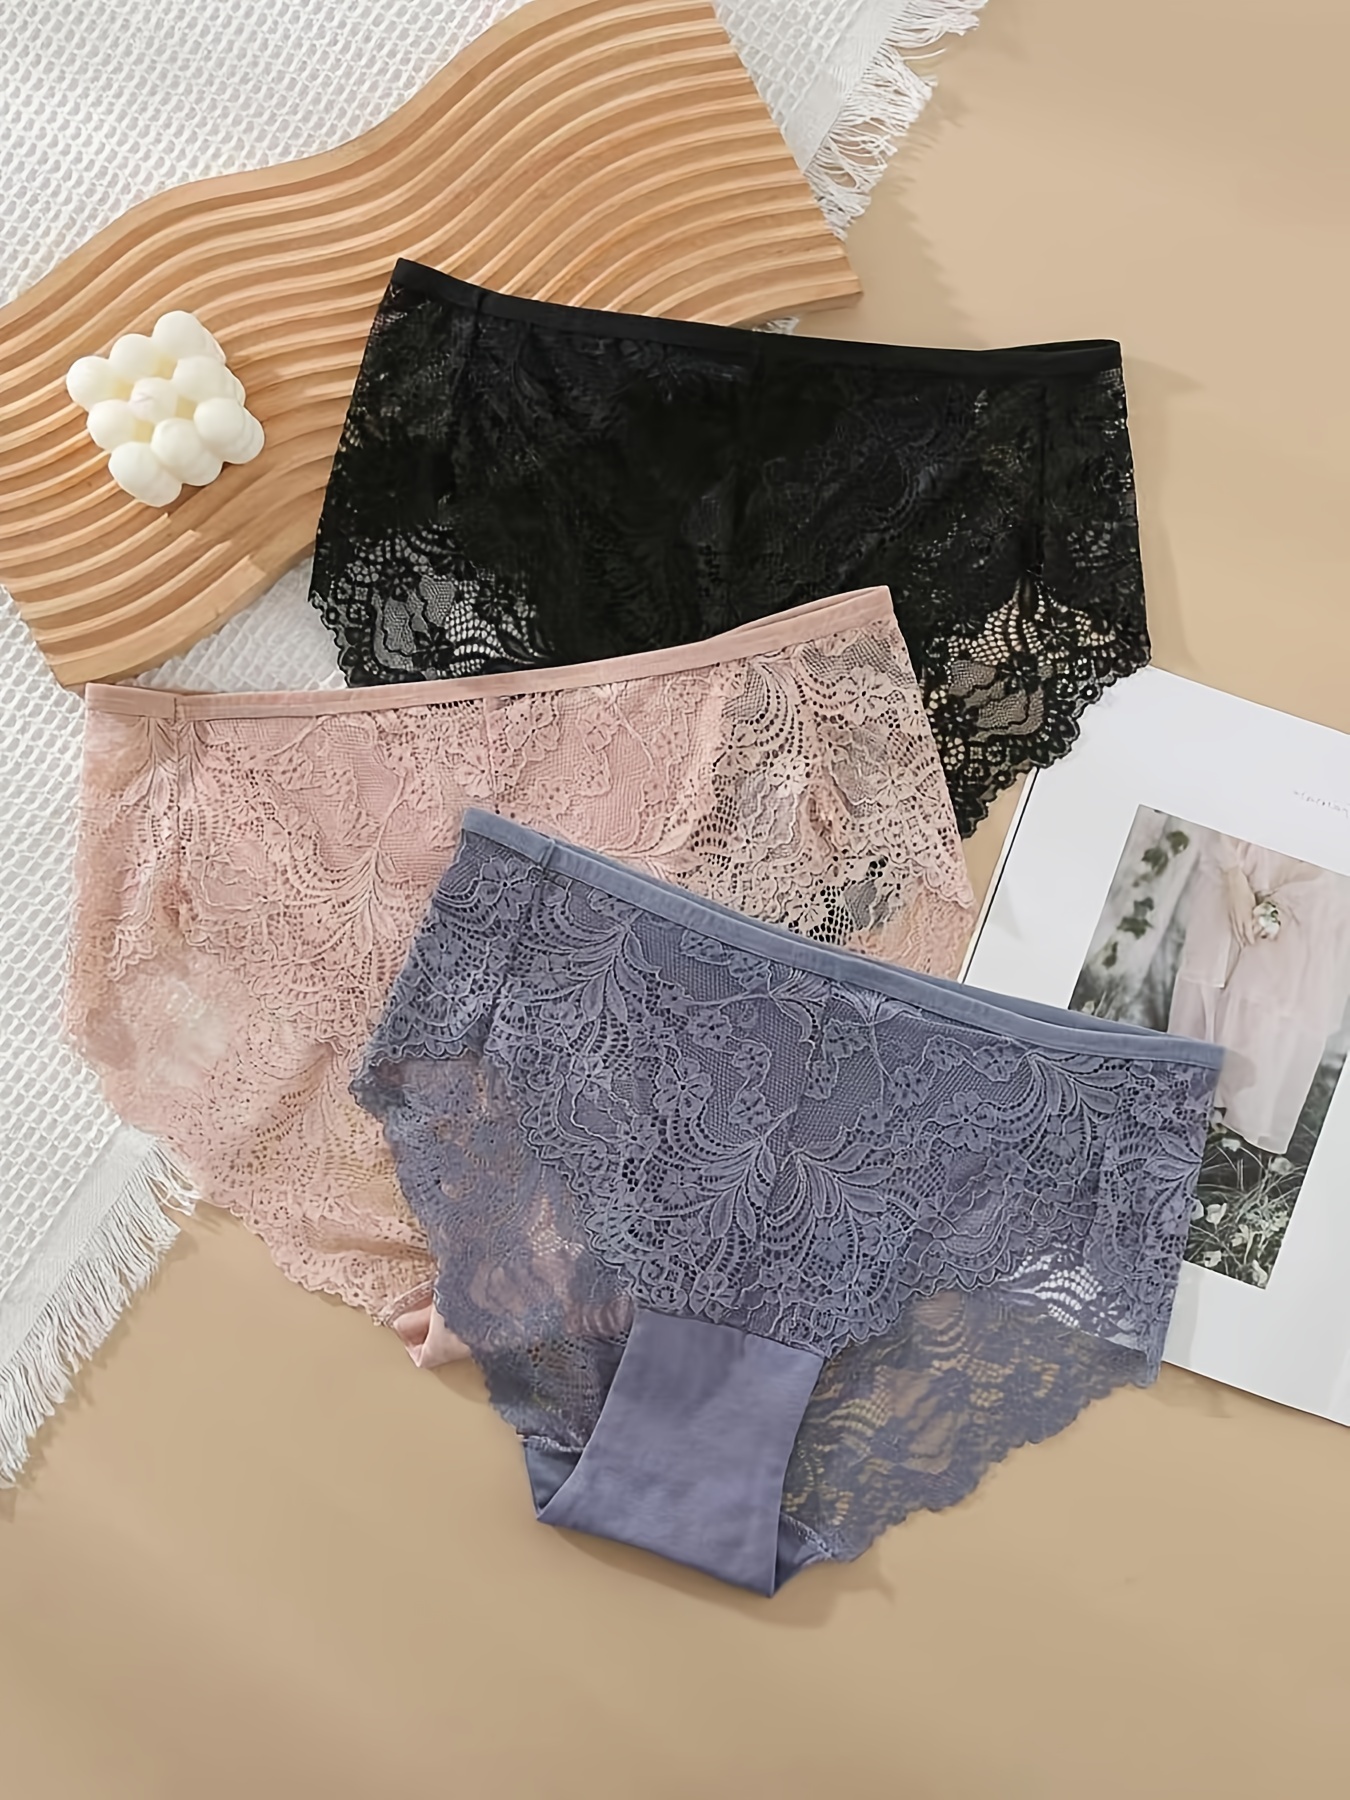 Women's Lingerie Underwear 3pcs Lace Stitching Briefs Sexy High Waist Mesh Panties